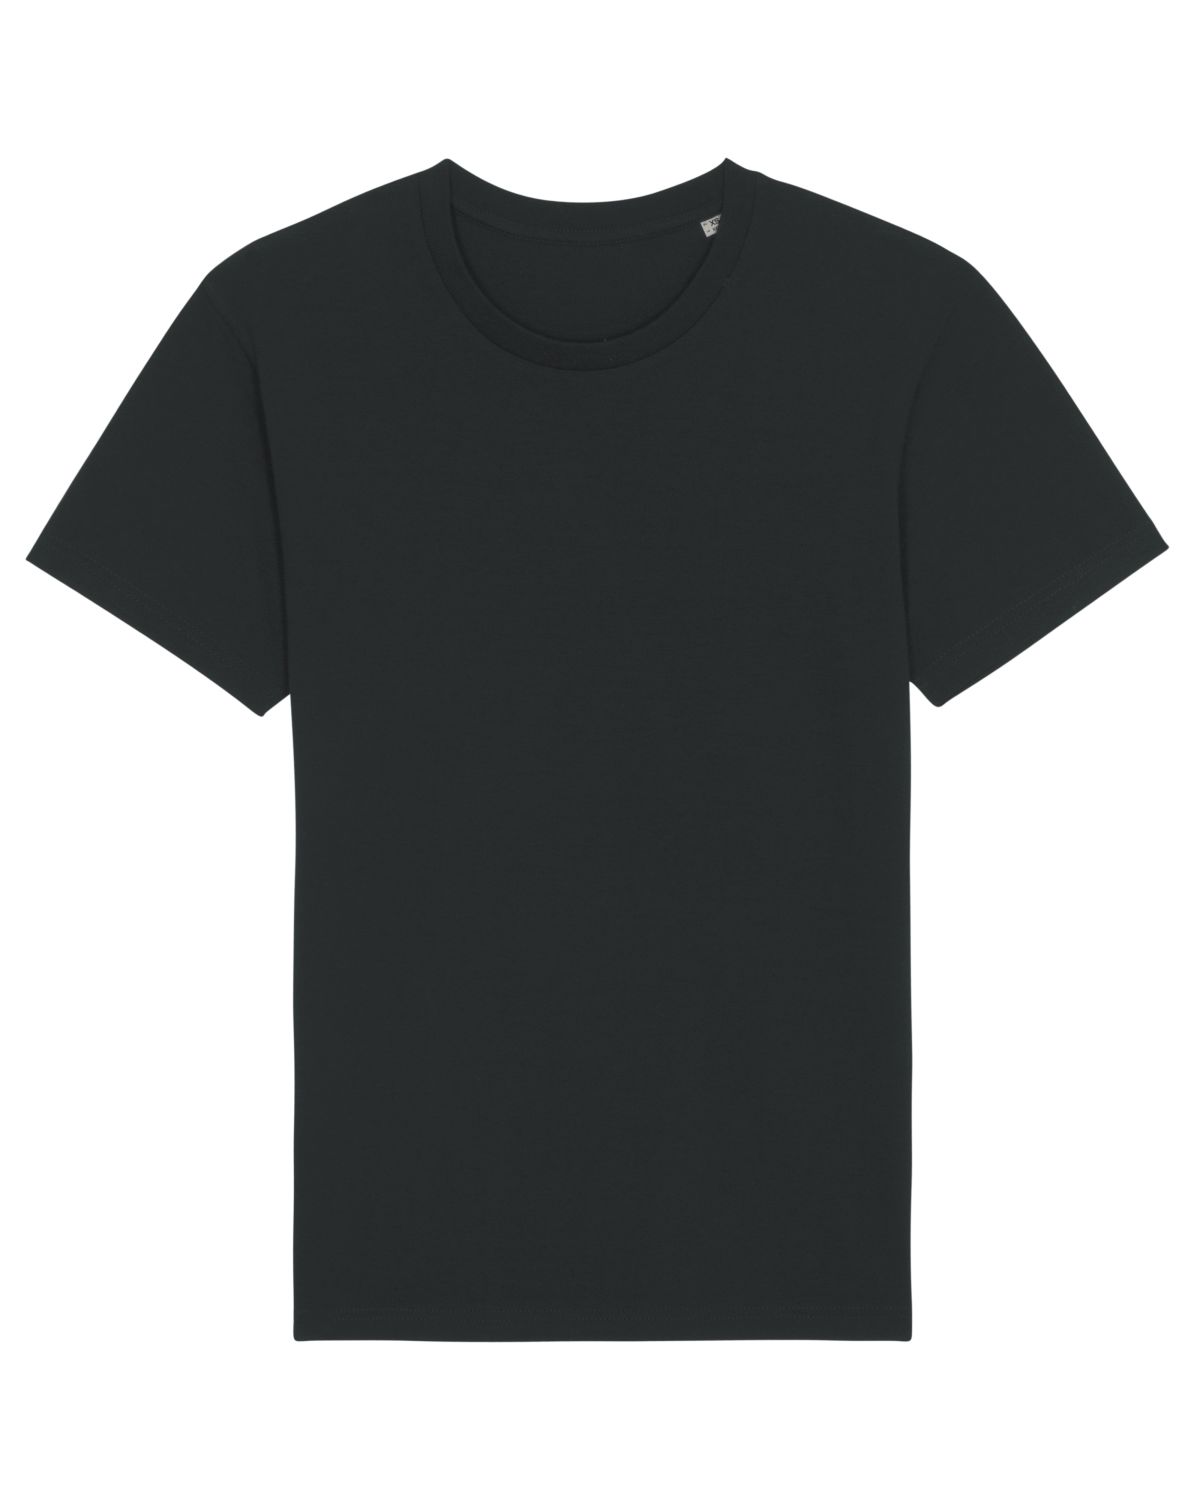 Stanley/Stella's - Rocker T-shirt - Black